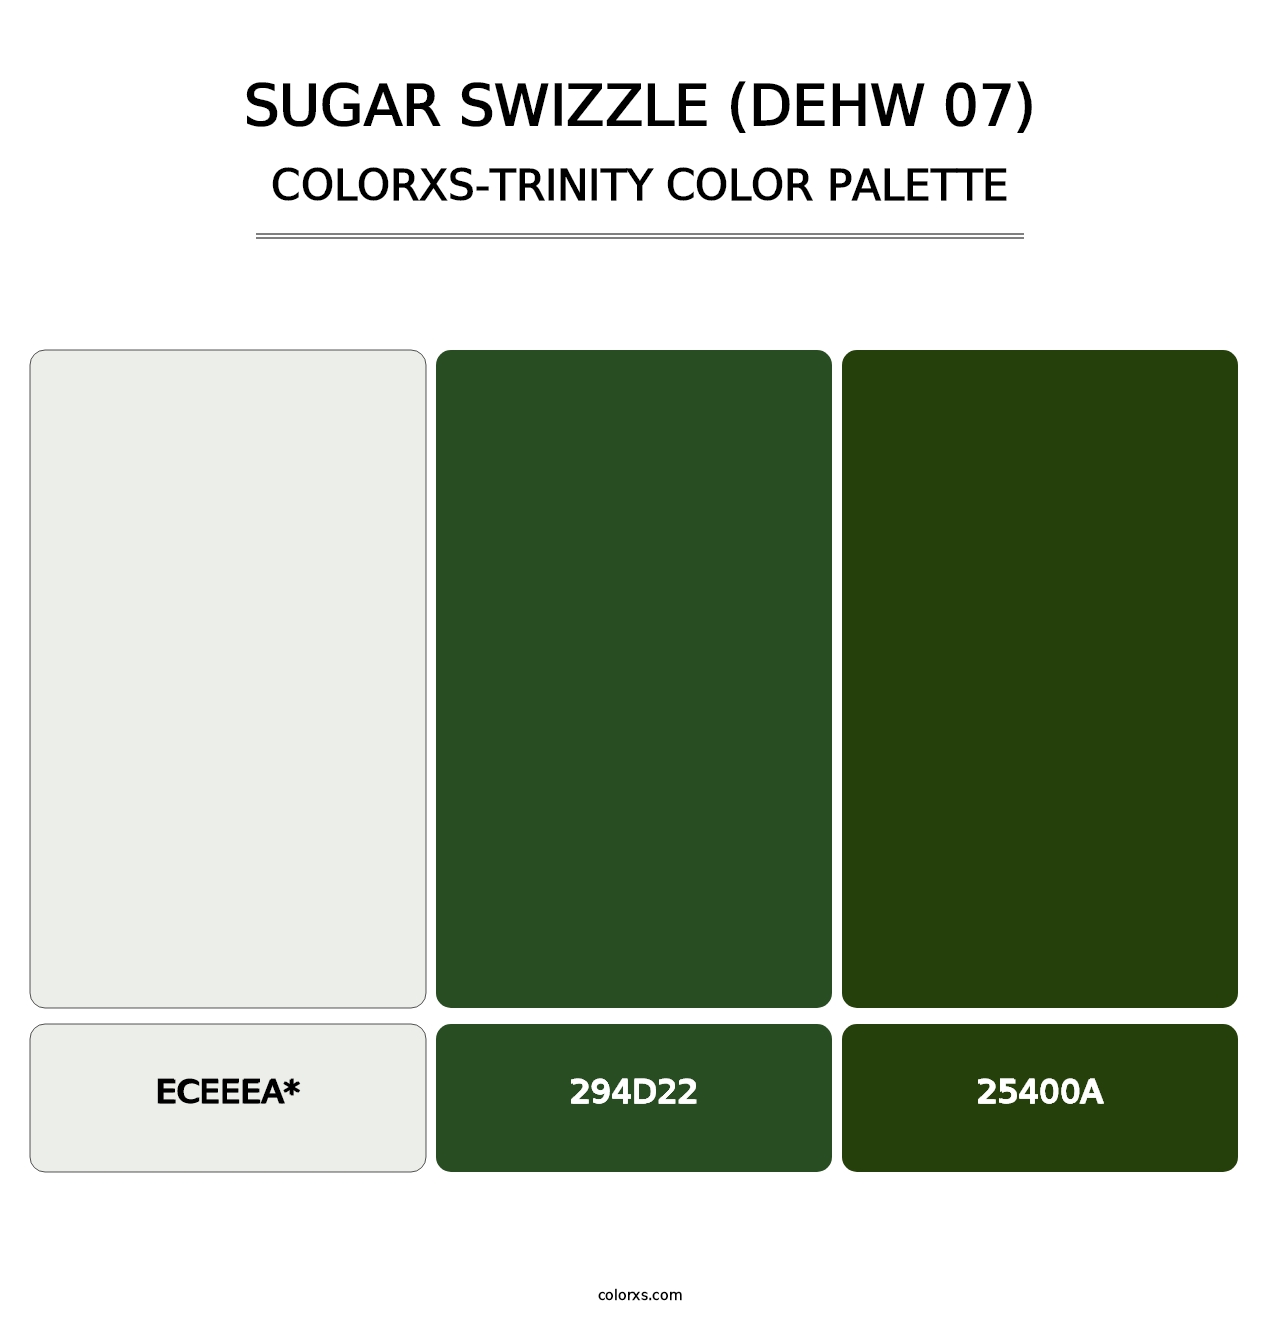 Sugar Swizzle (DEHW 07) - Colorxs Trinity Palette